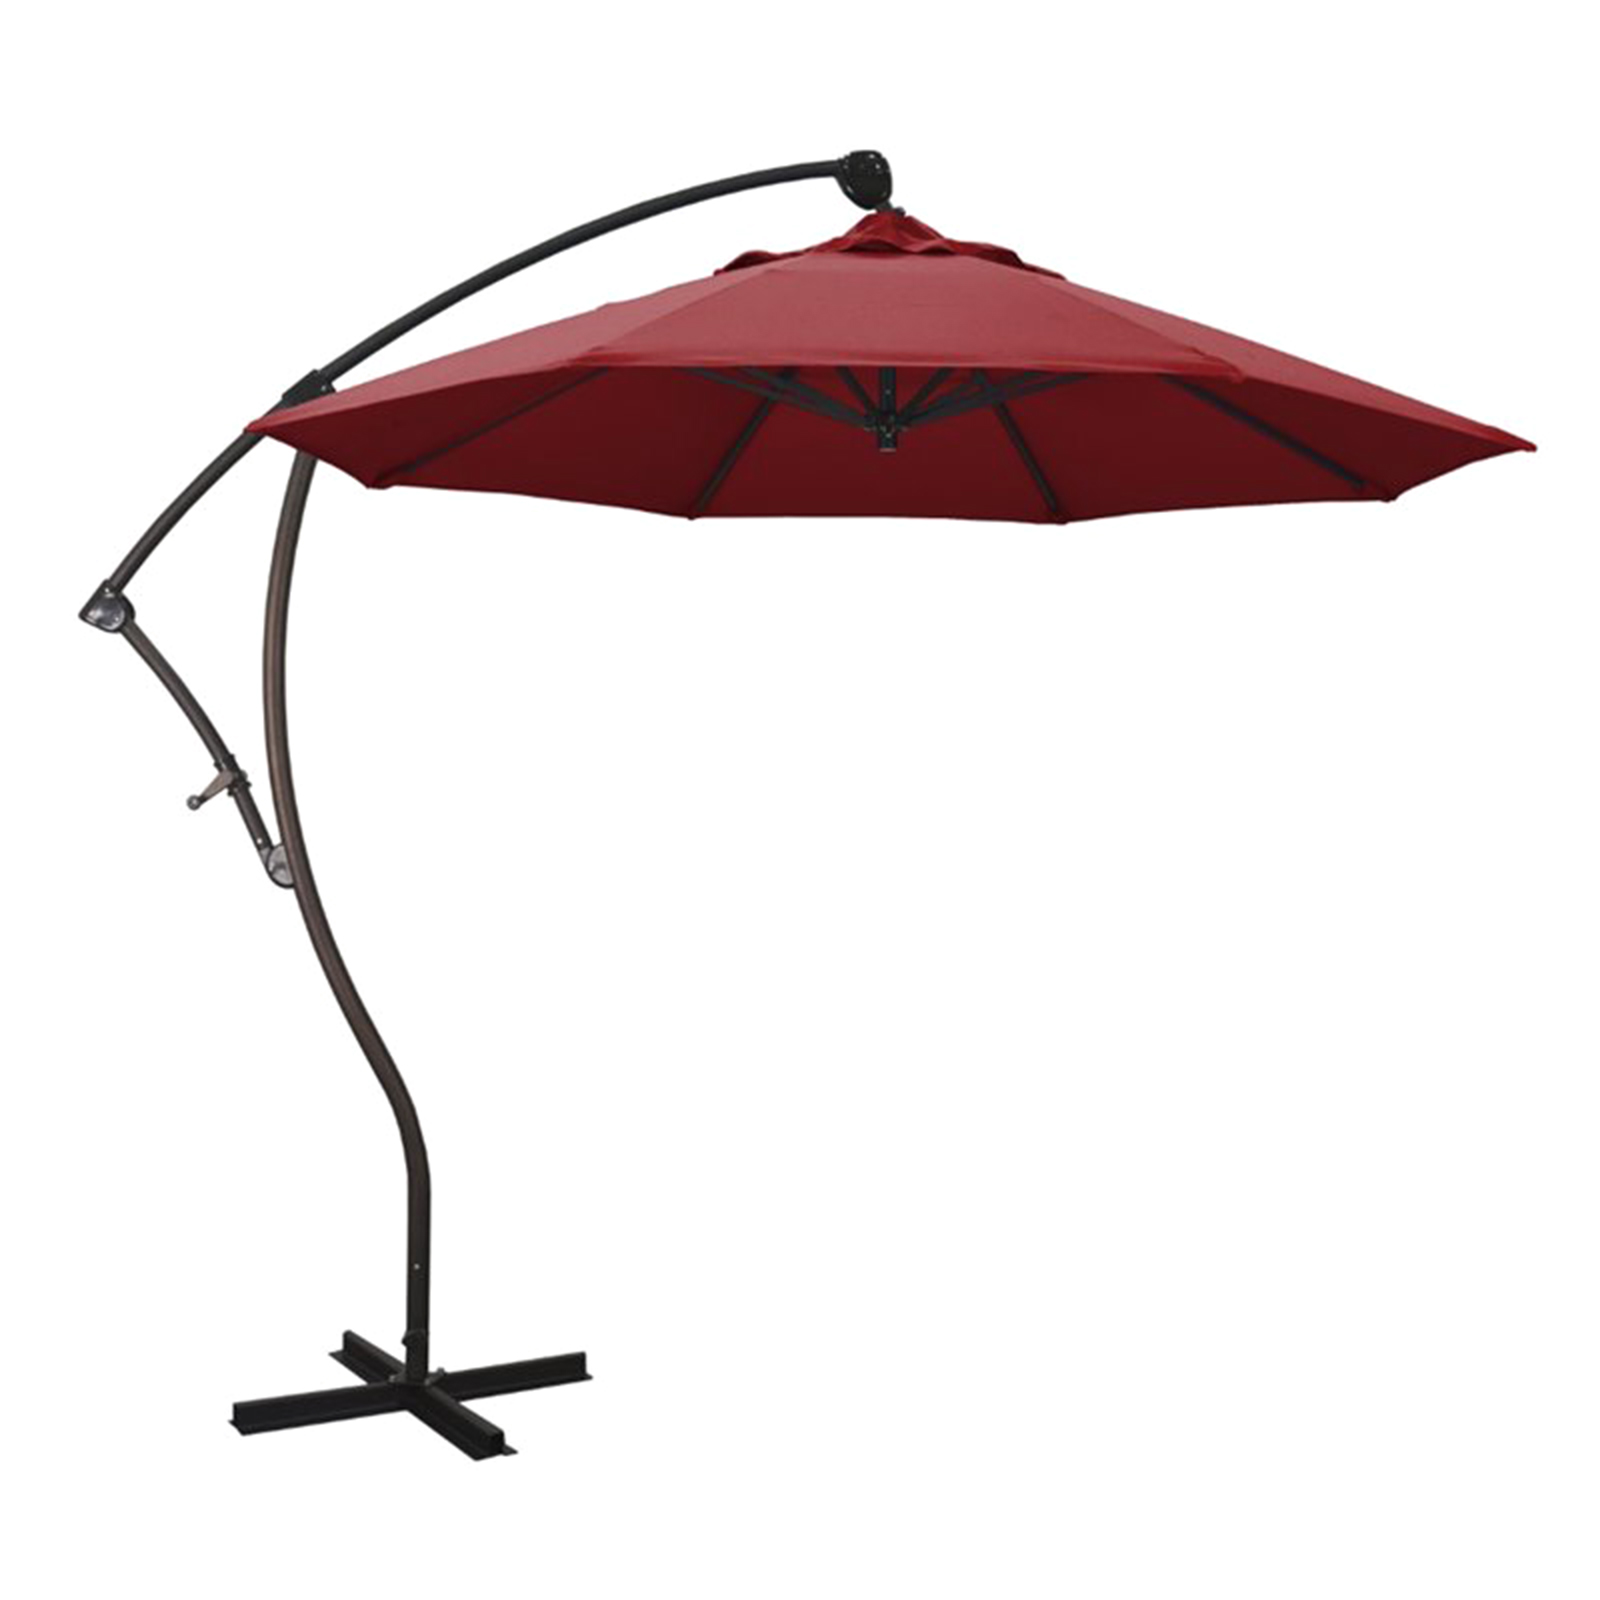 March Products 9' California Round Cantilever Umbrella